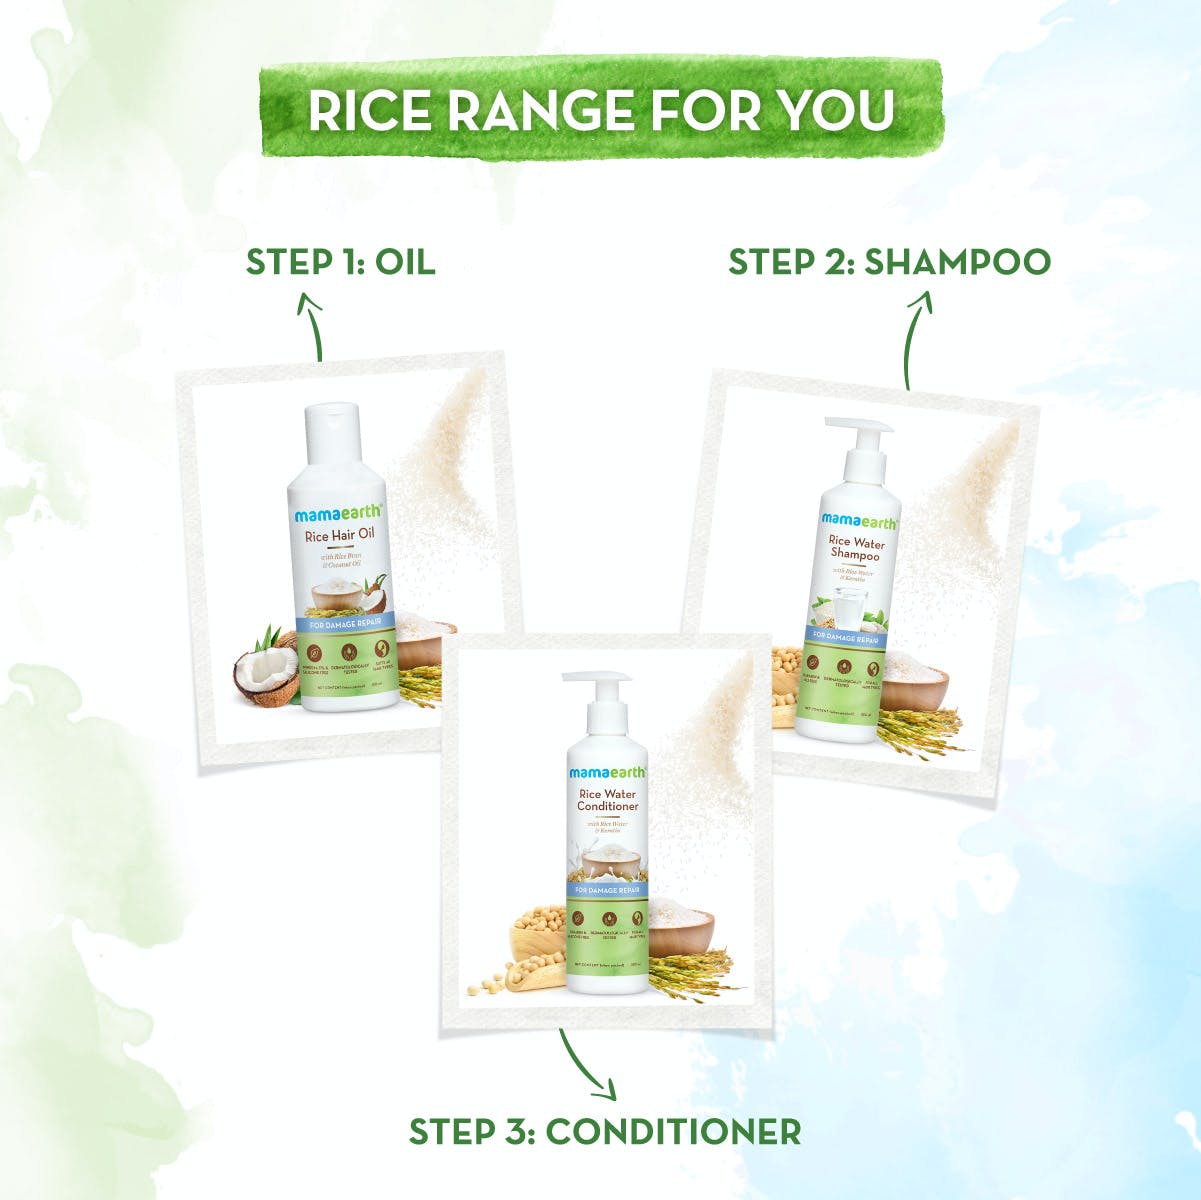 Mamaearth Hair Damage Repair Rice Water & Keratin Trio (Oil - 150ml + Shampoo - 250 ml + Conditioner - 250 ml)